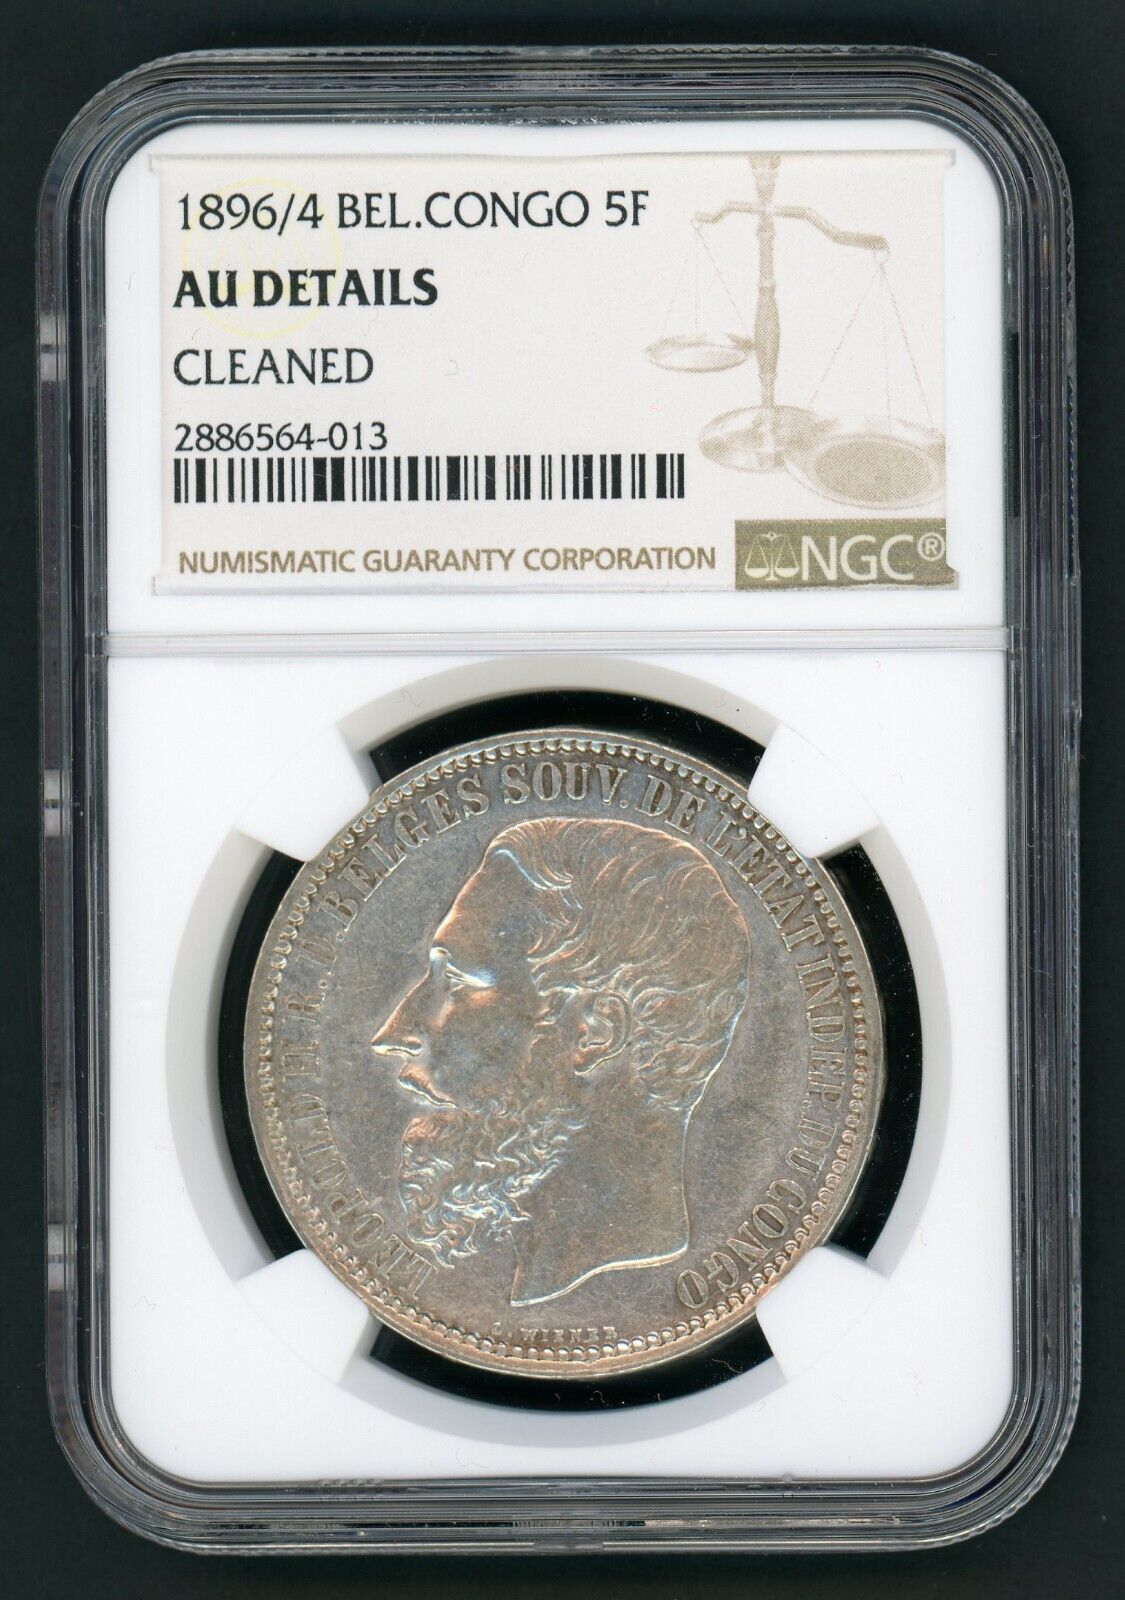 Belgian Congo 5 Francs 1896/4leopold Ii Silver Coin Graded Ngc Au Details Ak 105